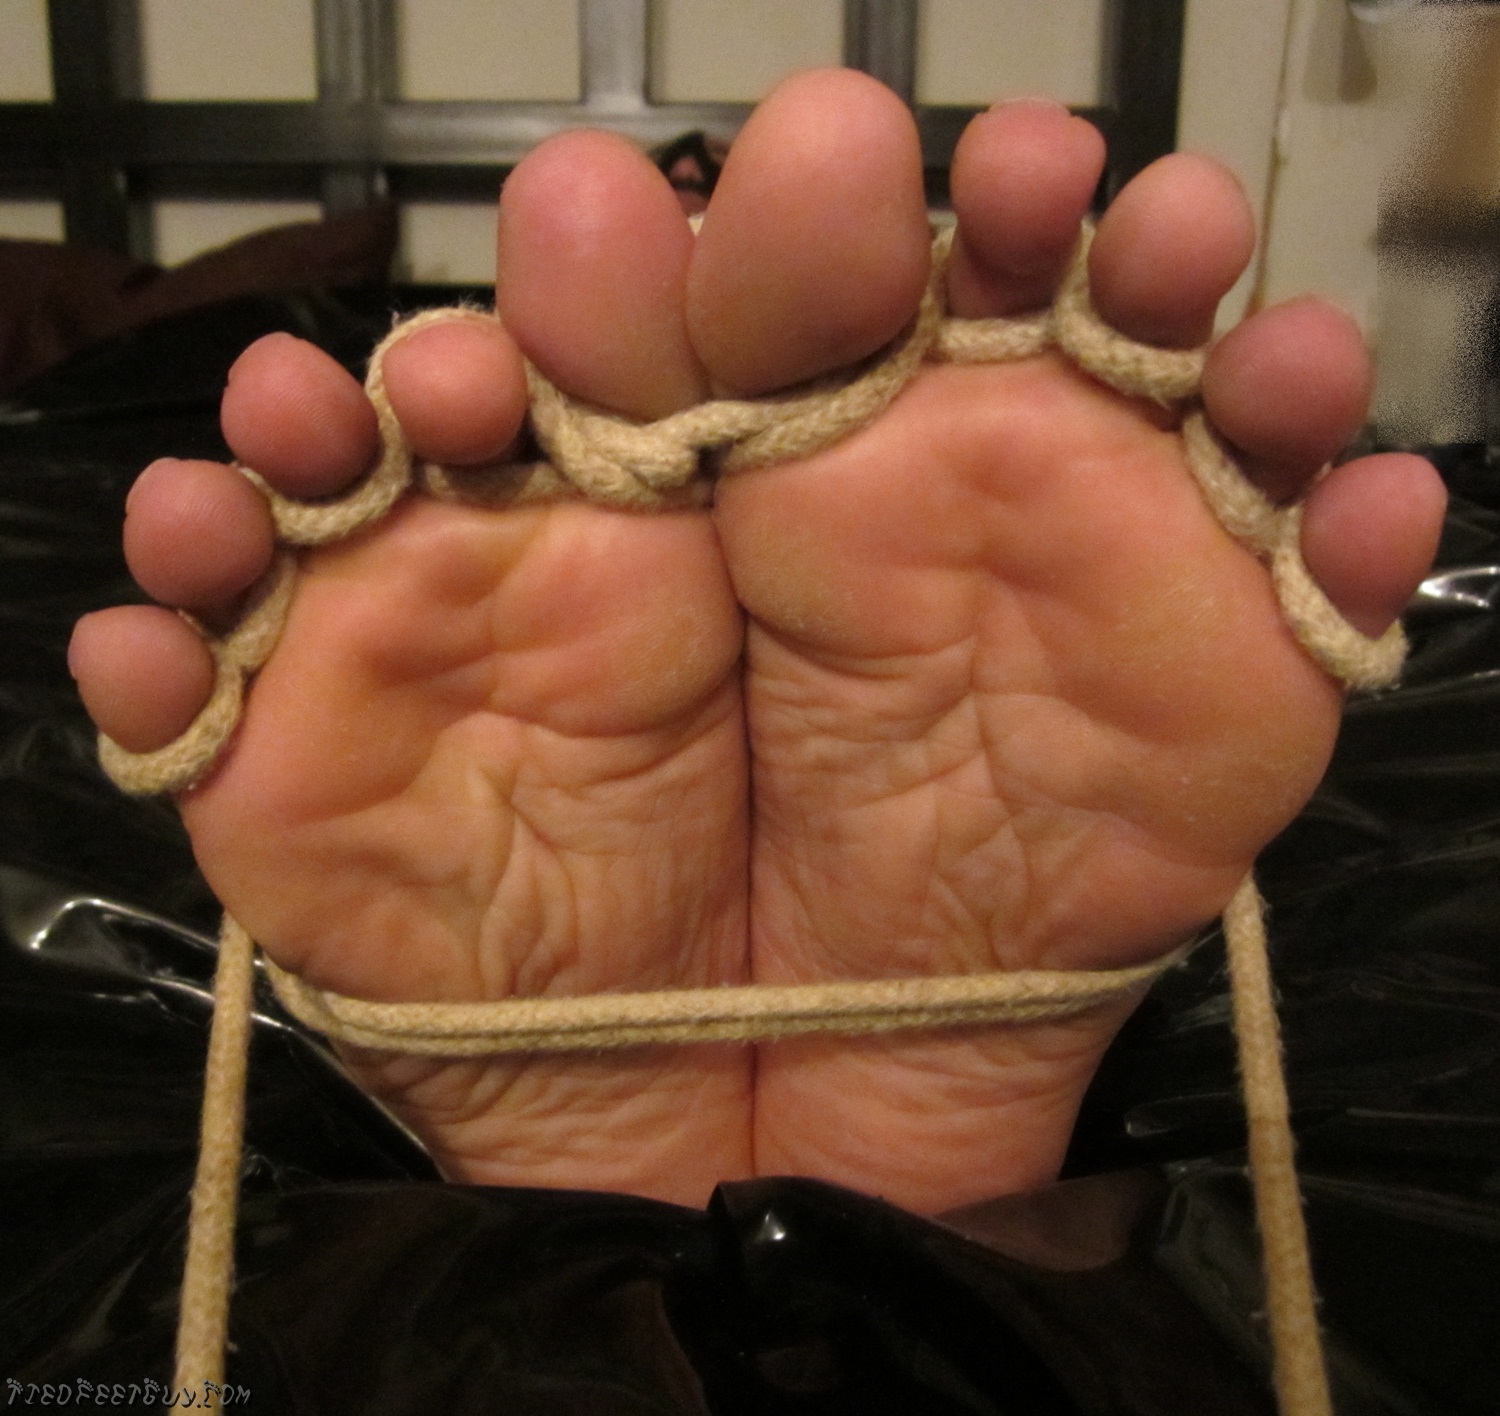 Foot and toe bondage